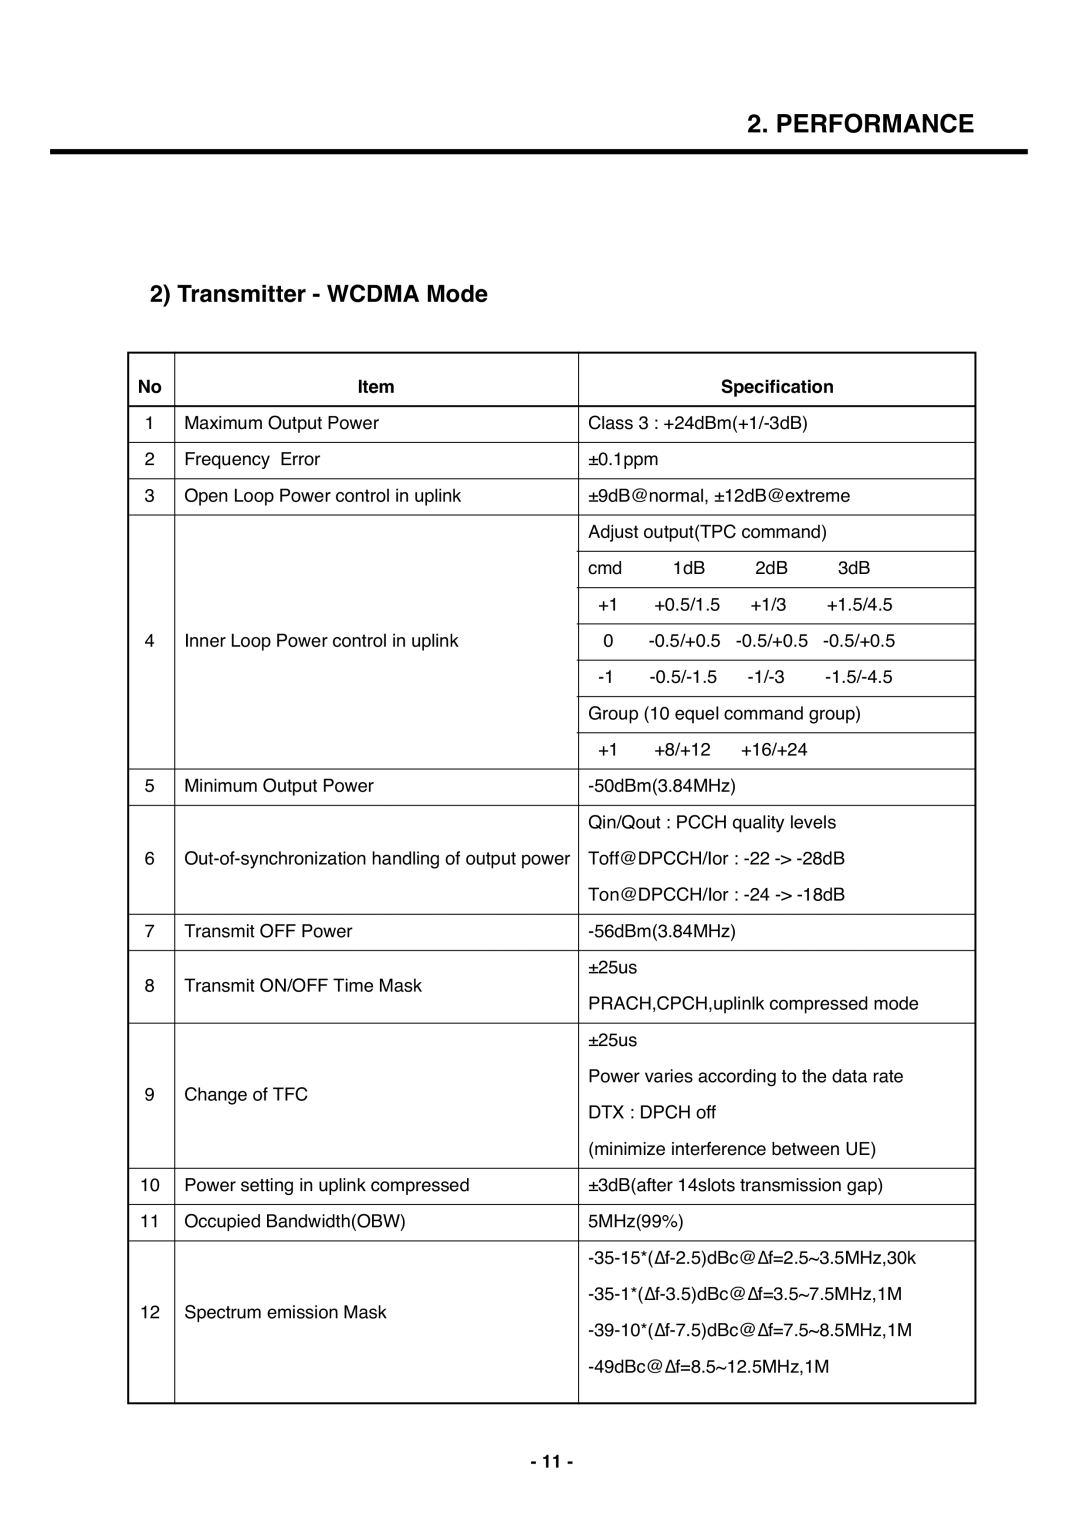 LG Electronics U250 service manual Transmitter Wcdma Mode, Specification 